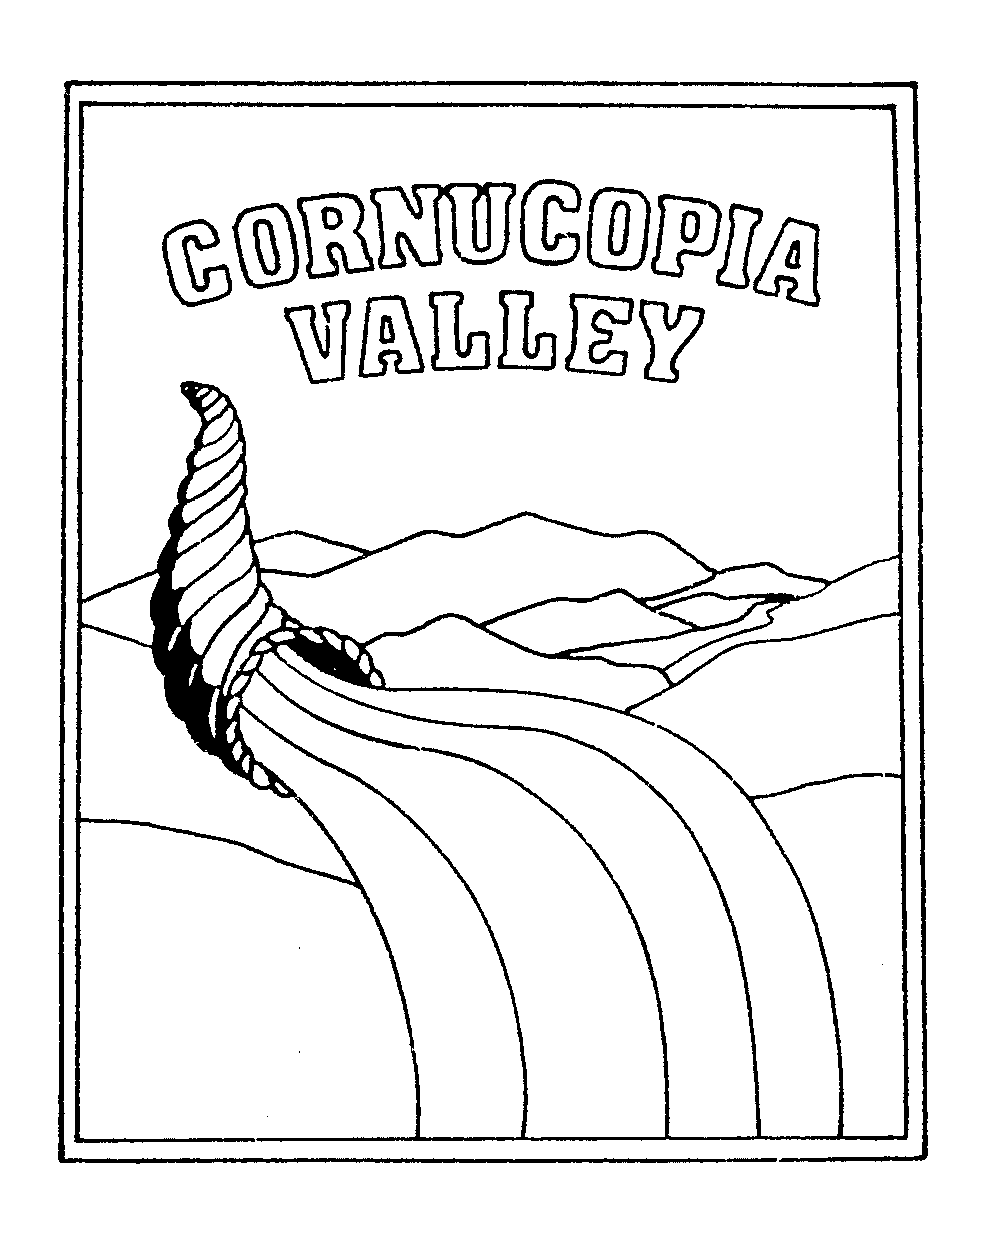  CORNUCOPIA VALLEY